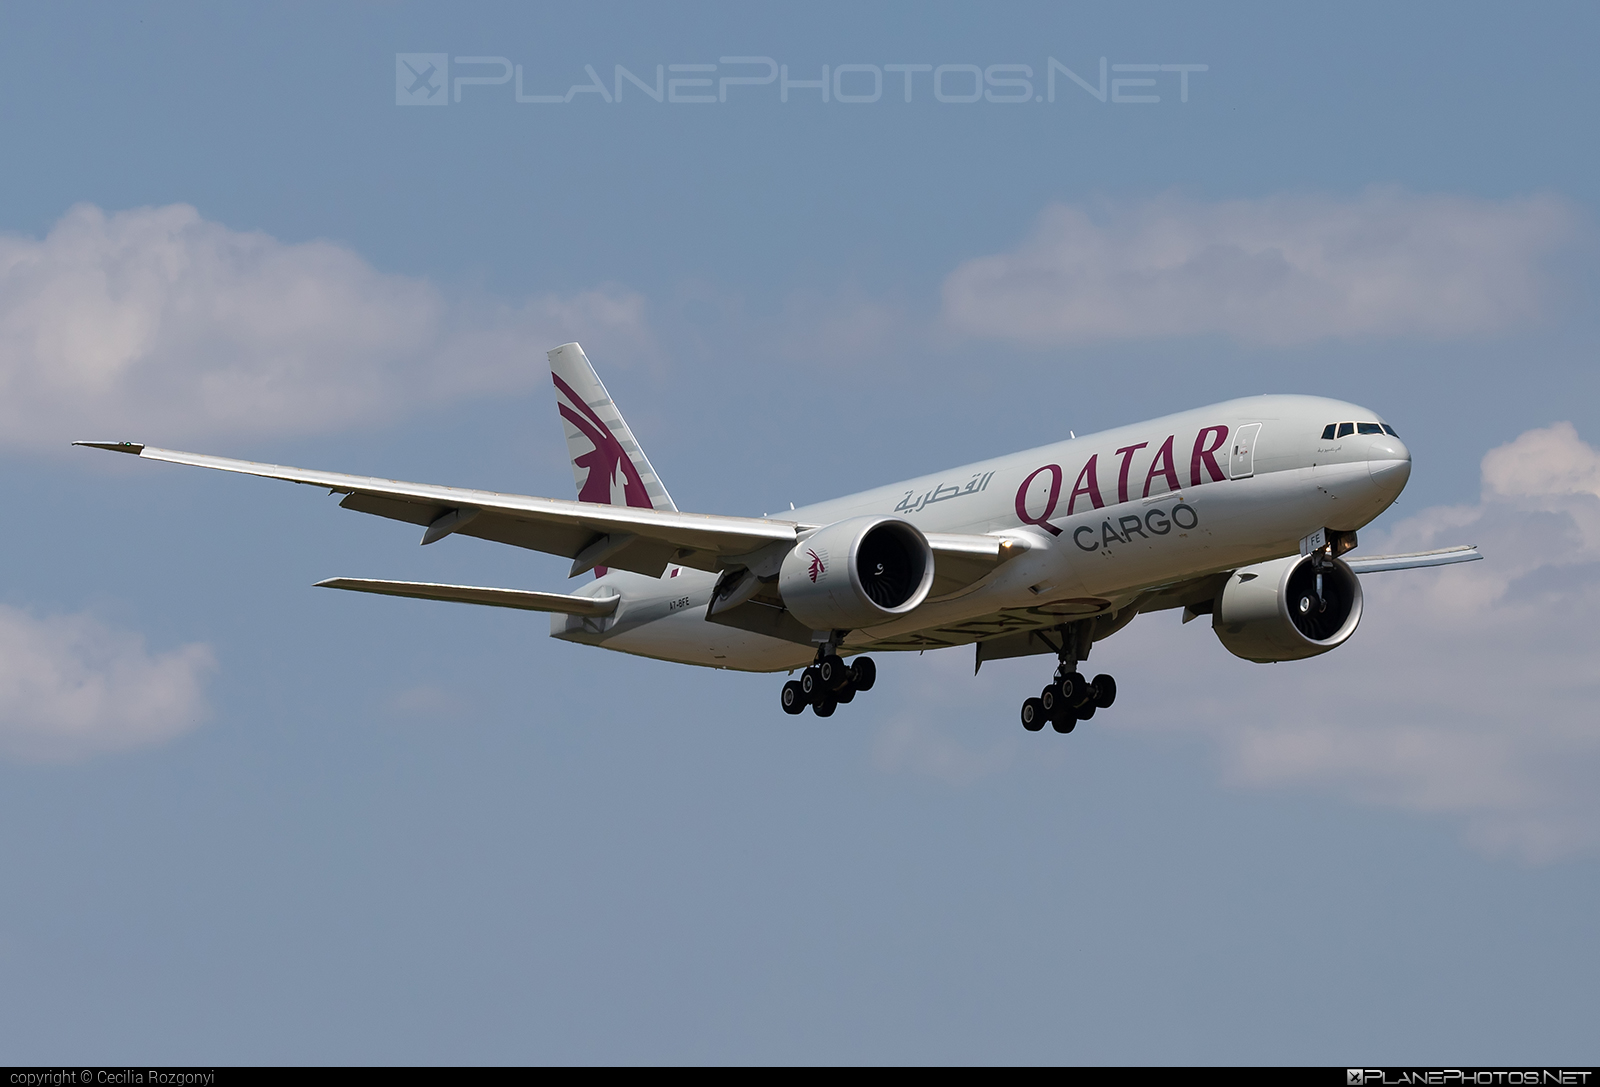 Boeing 777F - A7-BFE operated by Qatar Airways Cargo #b777 #b777f #b777freighter #boeing #boeing777 #qatarairwayscargo #tripleseven